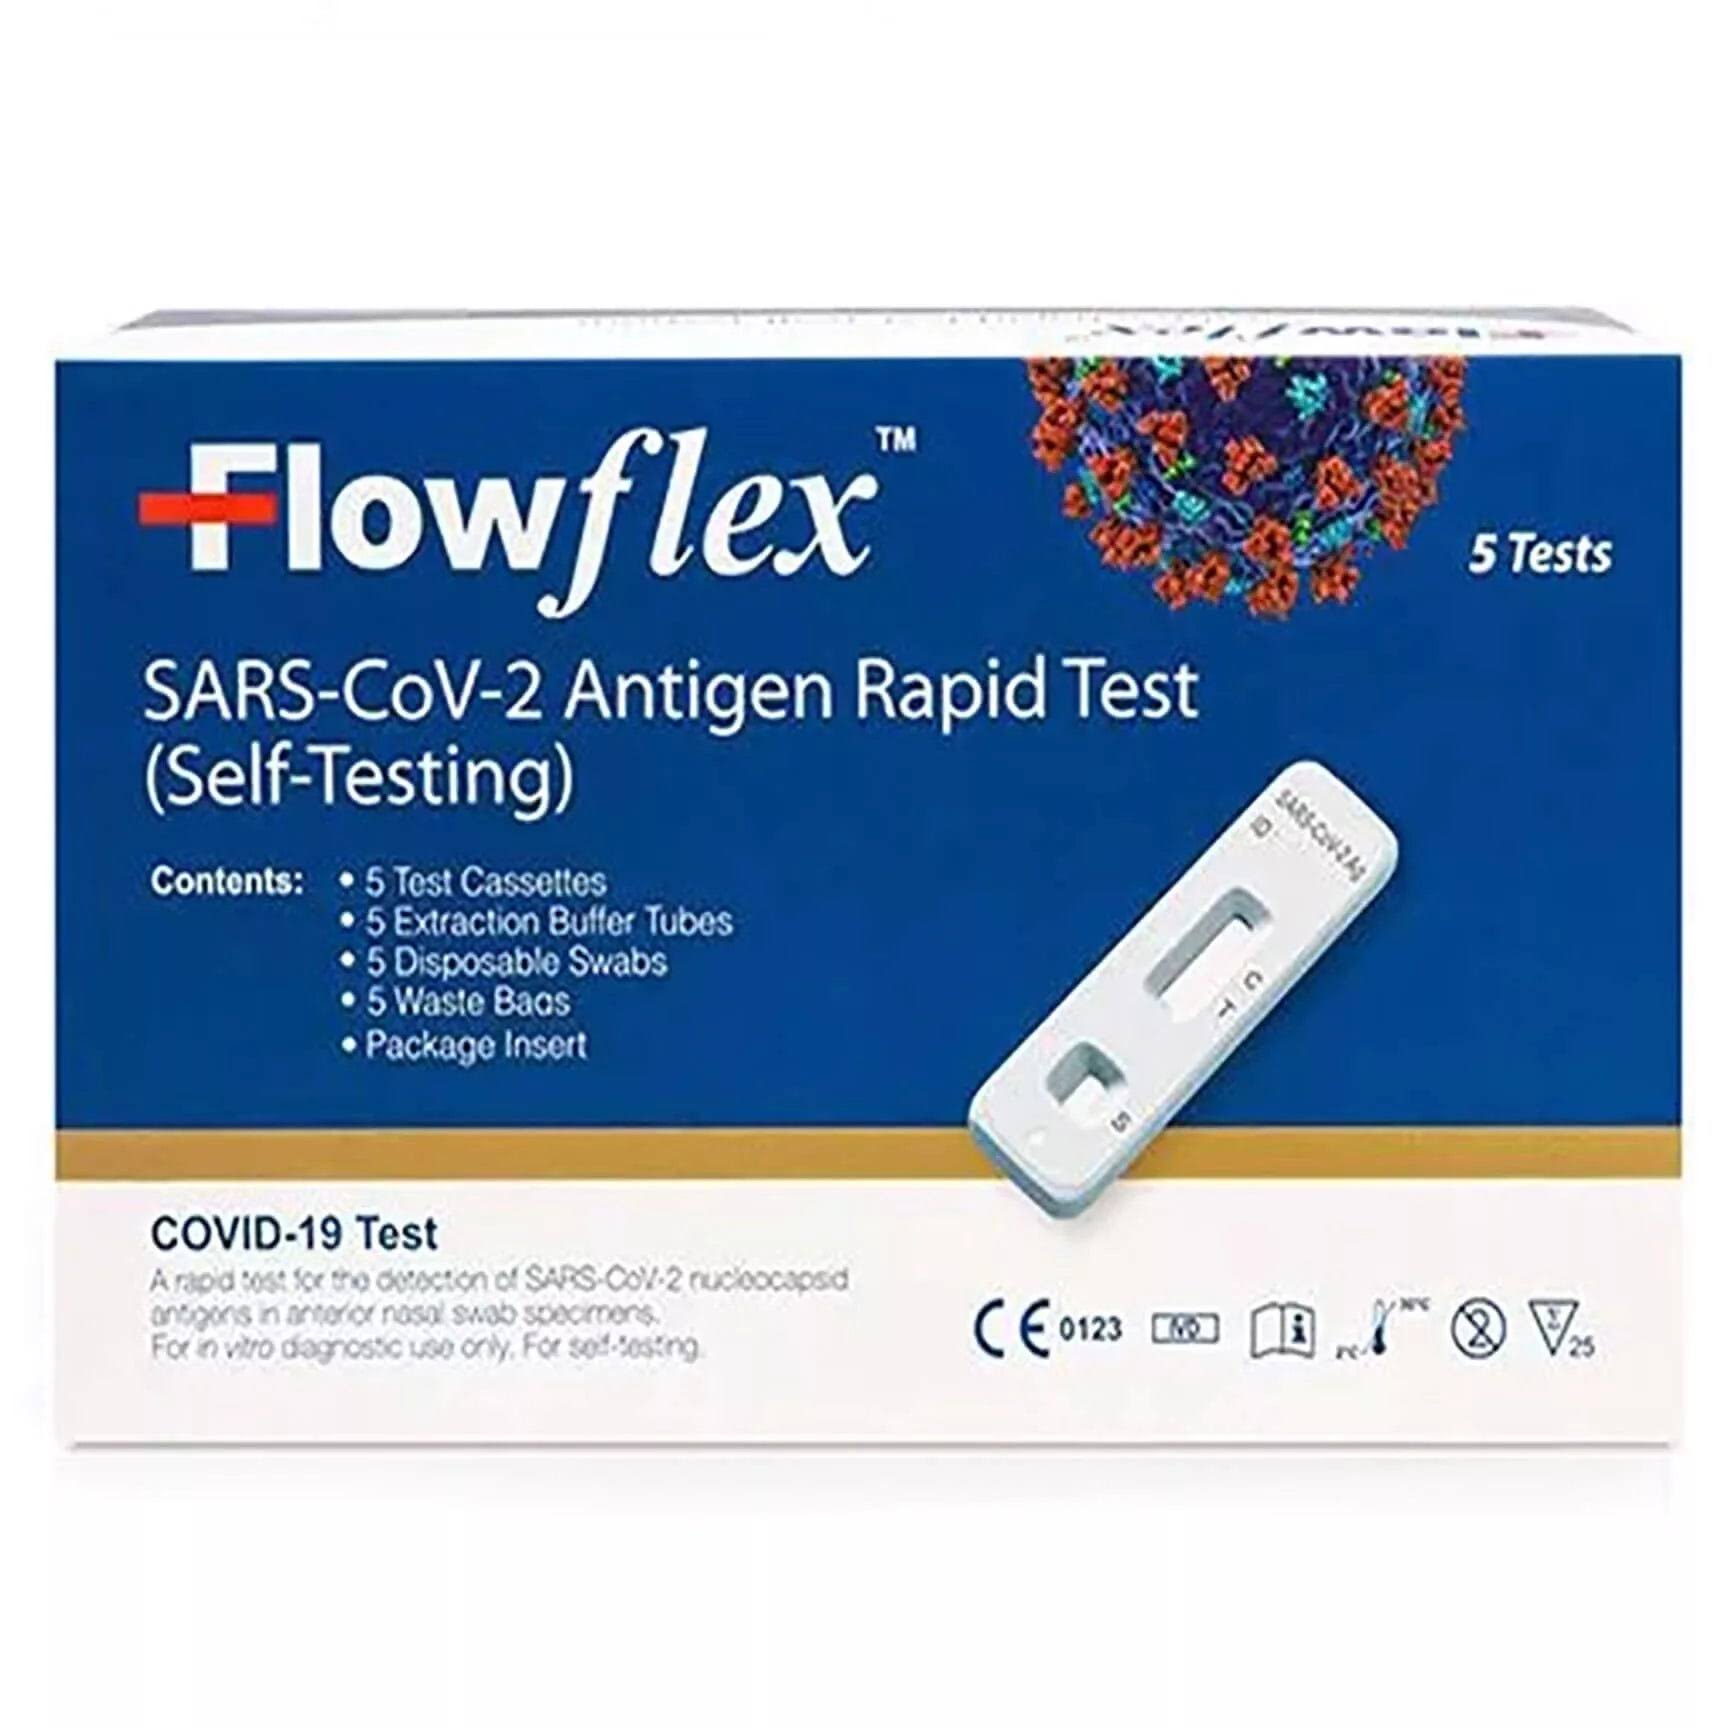 Flowflex Antigen Rapid COVID Lateral Flow Test - 5 Tests